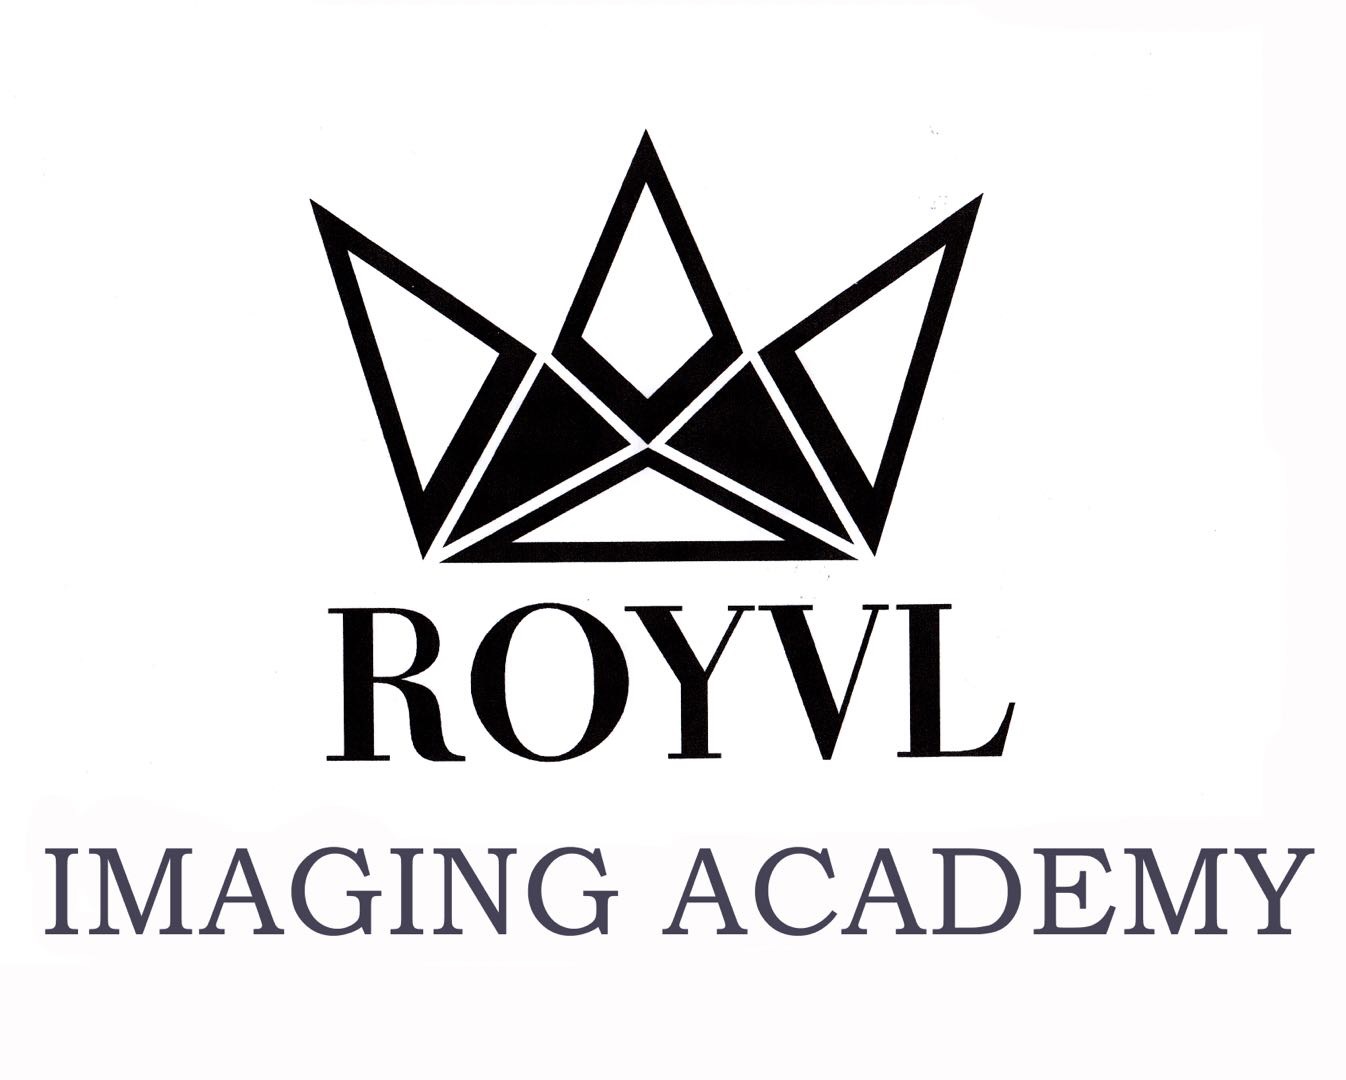 Royvl Imaging Academy